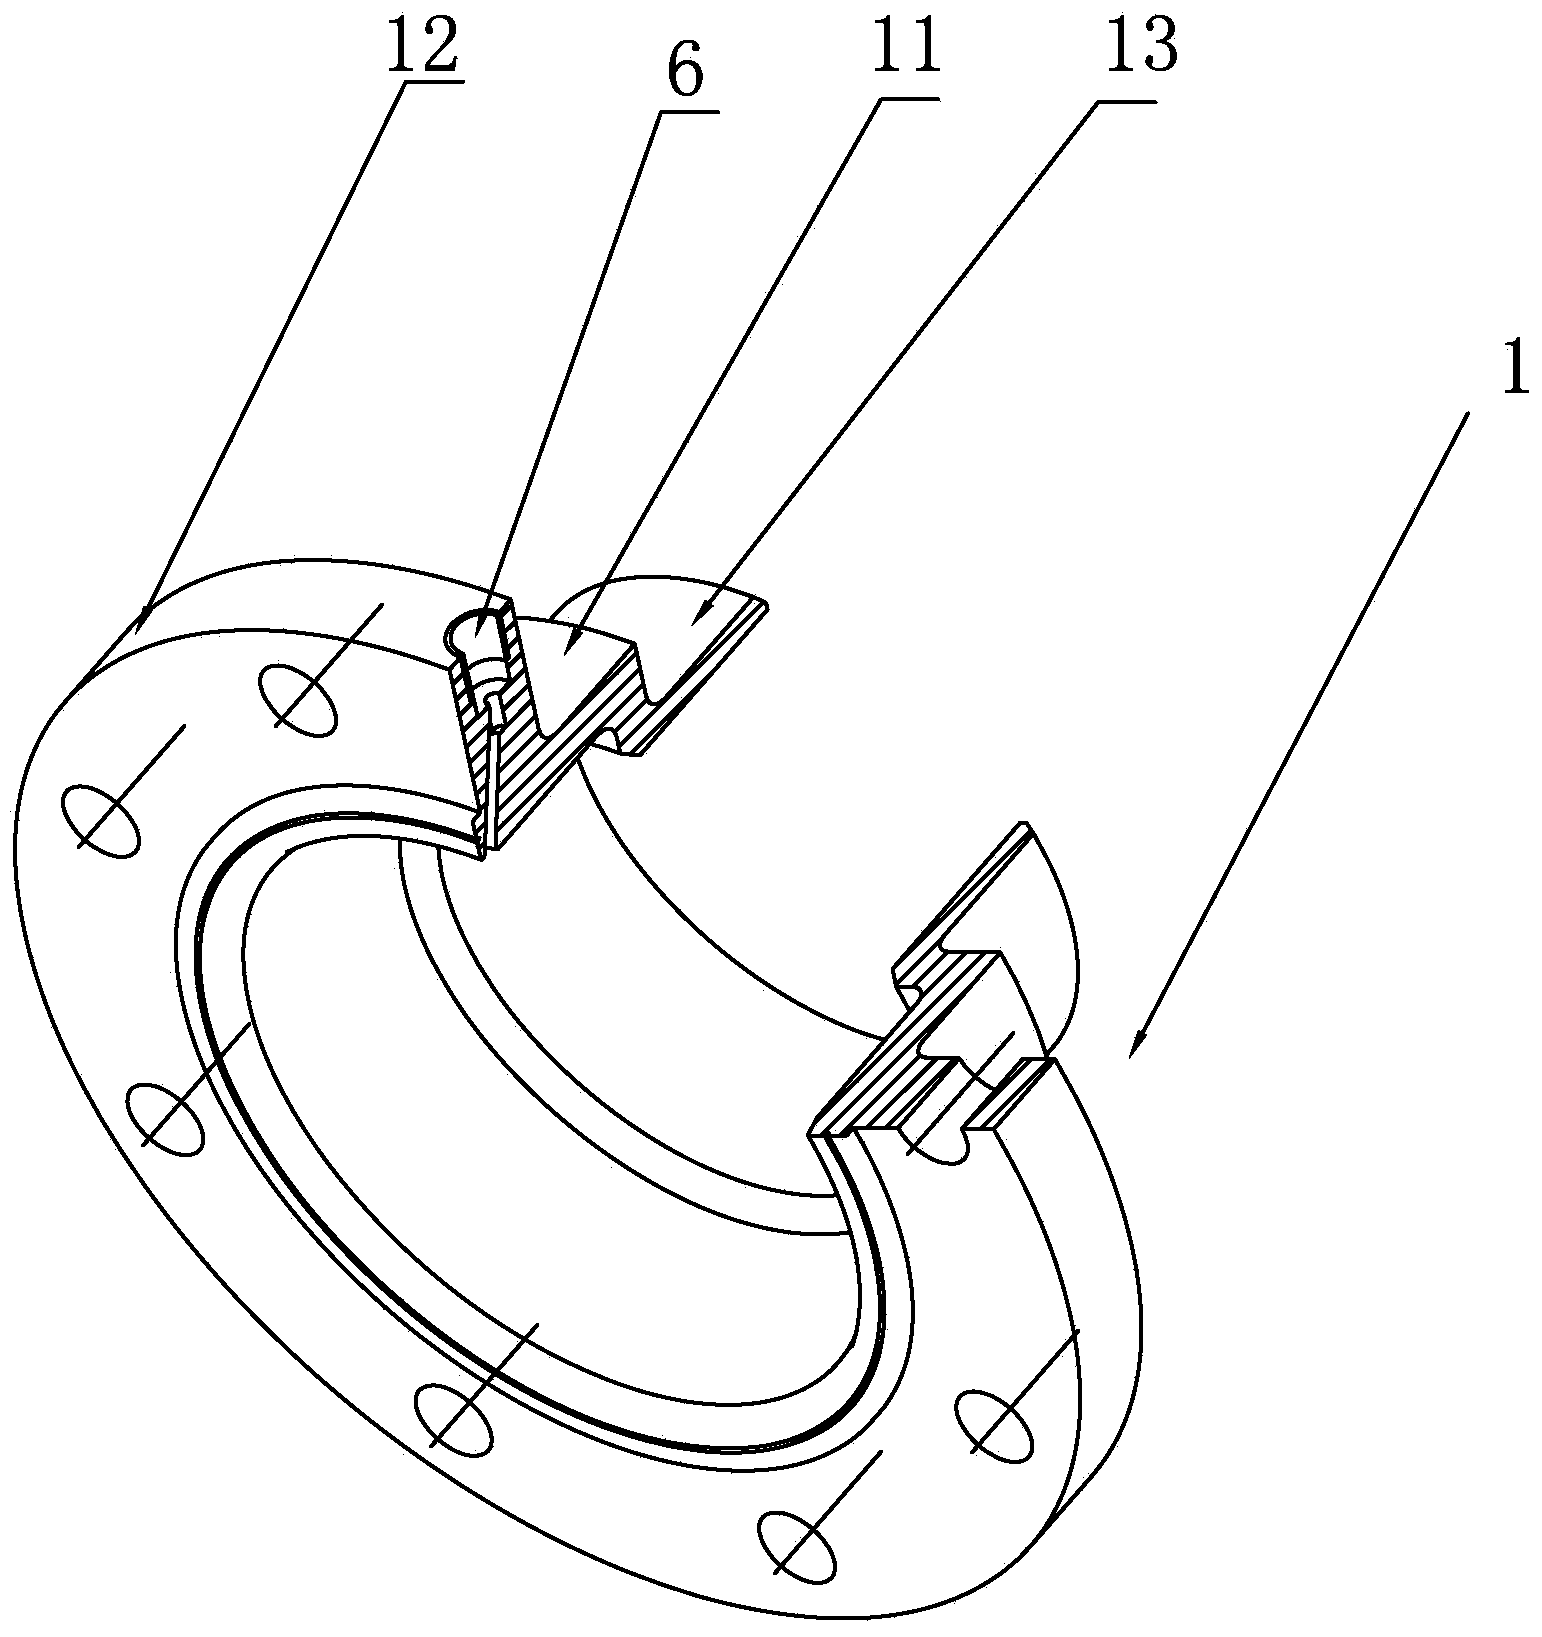 Redundant seal pipeline connector